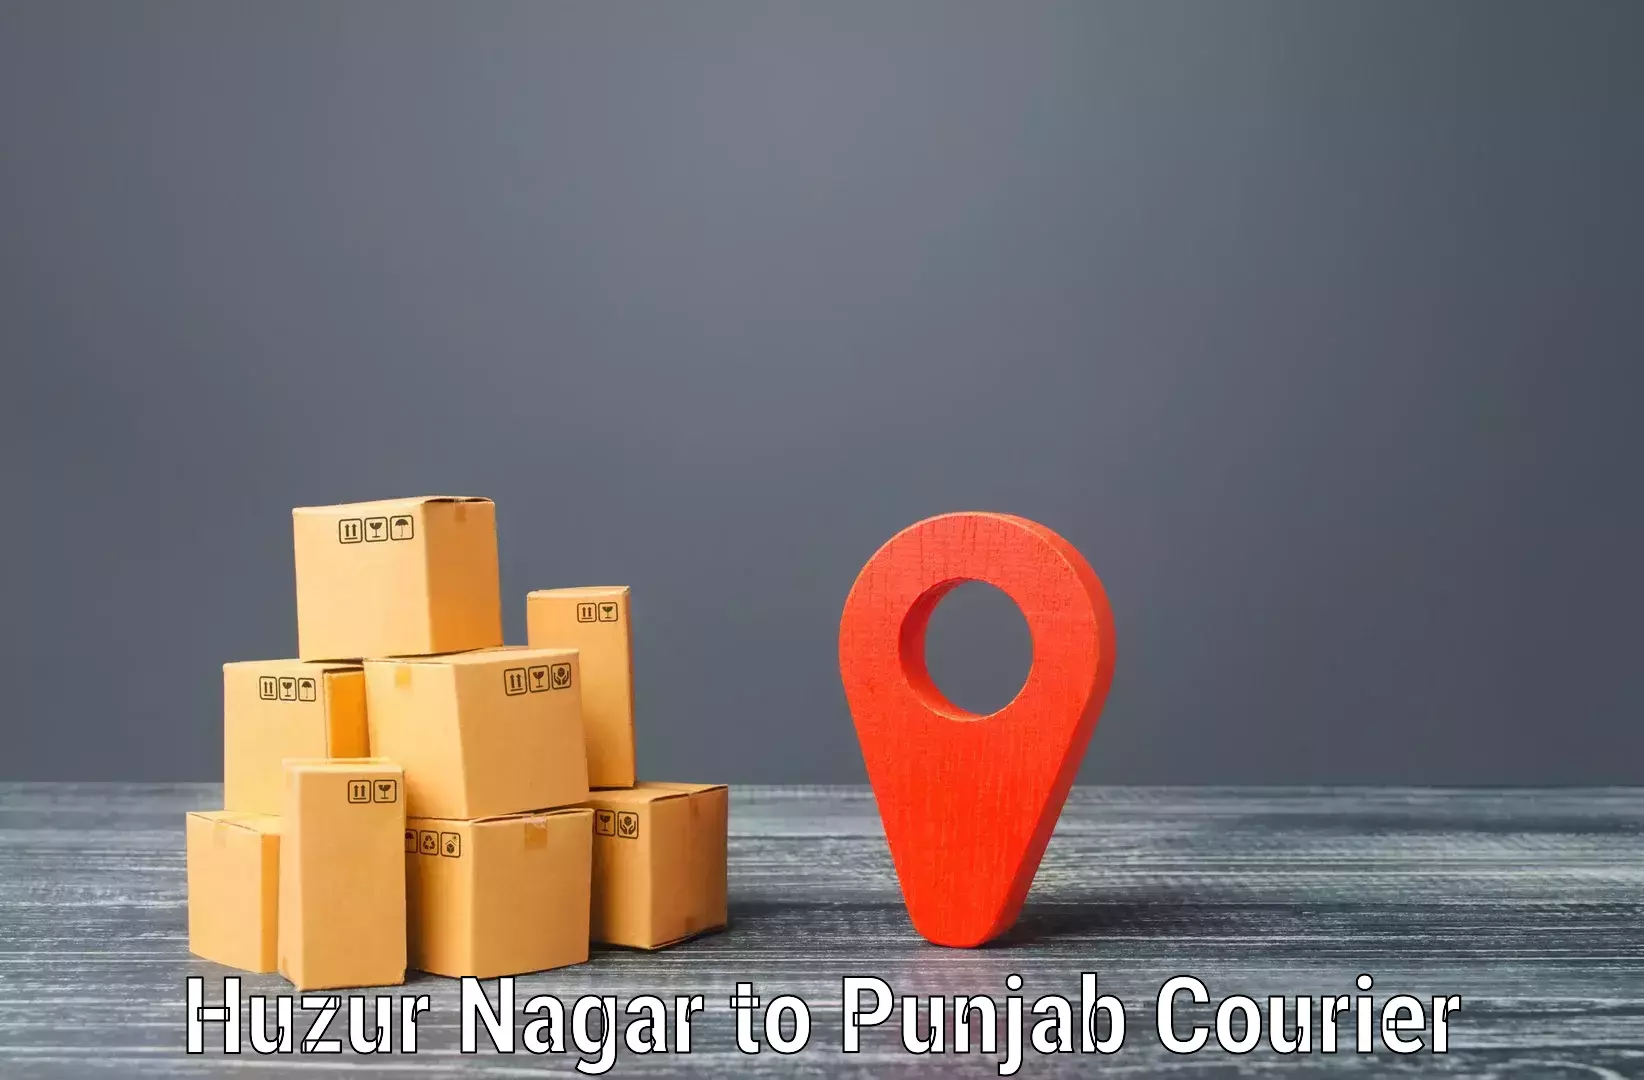 Versatile courier options Huzur Nagar to Mohali